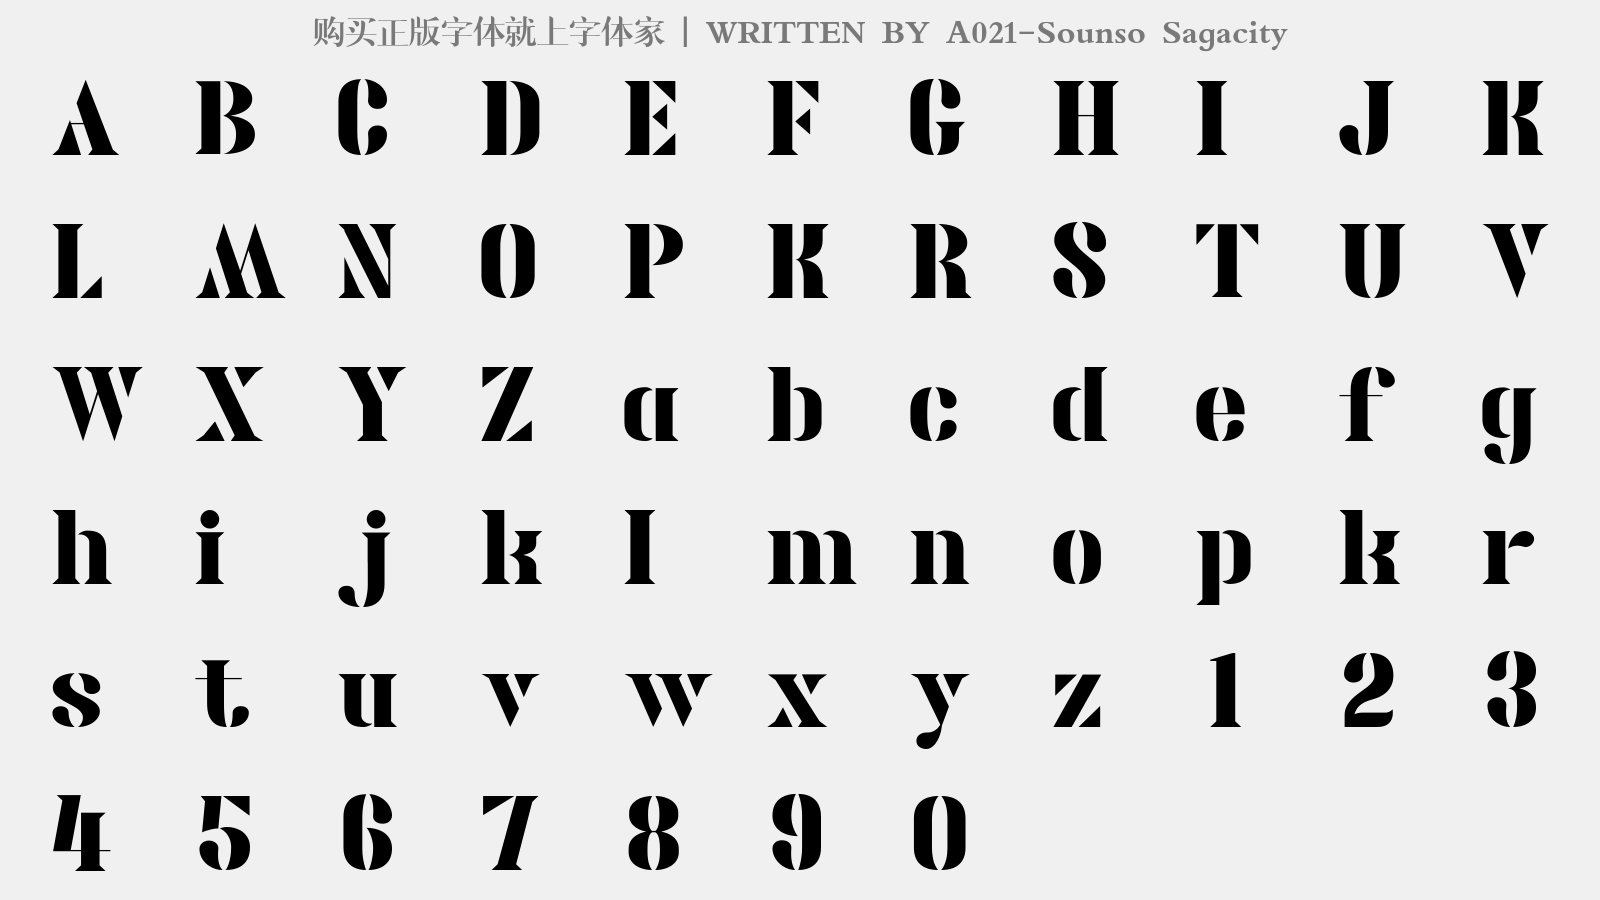 A021-Sounso Sagacity - 大写字母/小写字母/数字